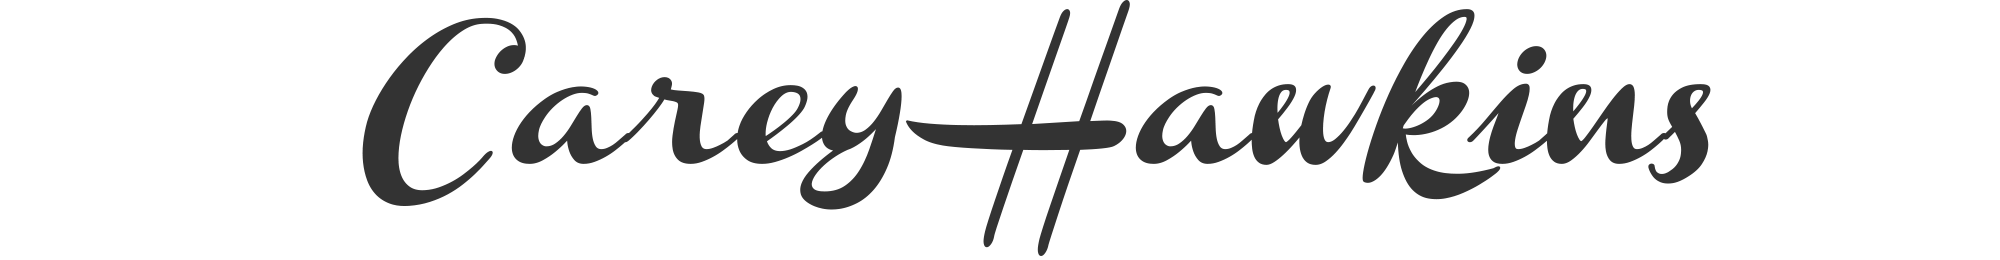 Carey Hawkins logo